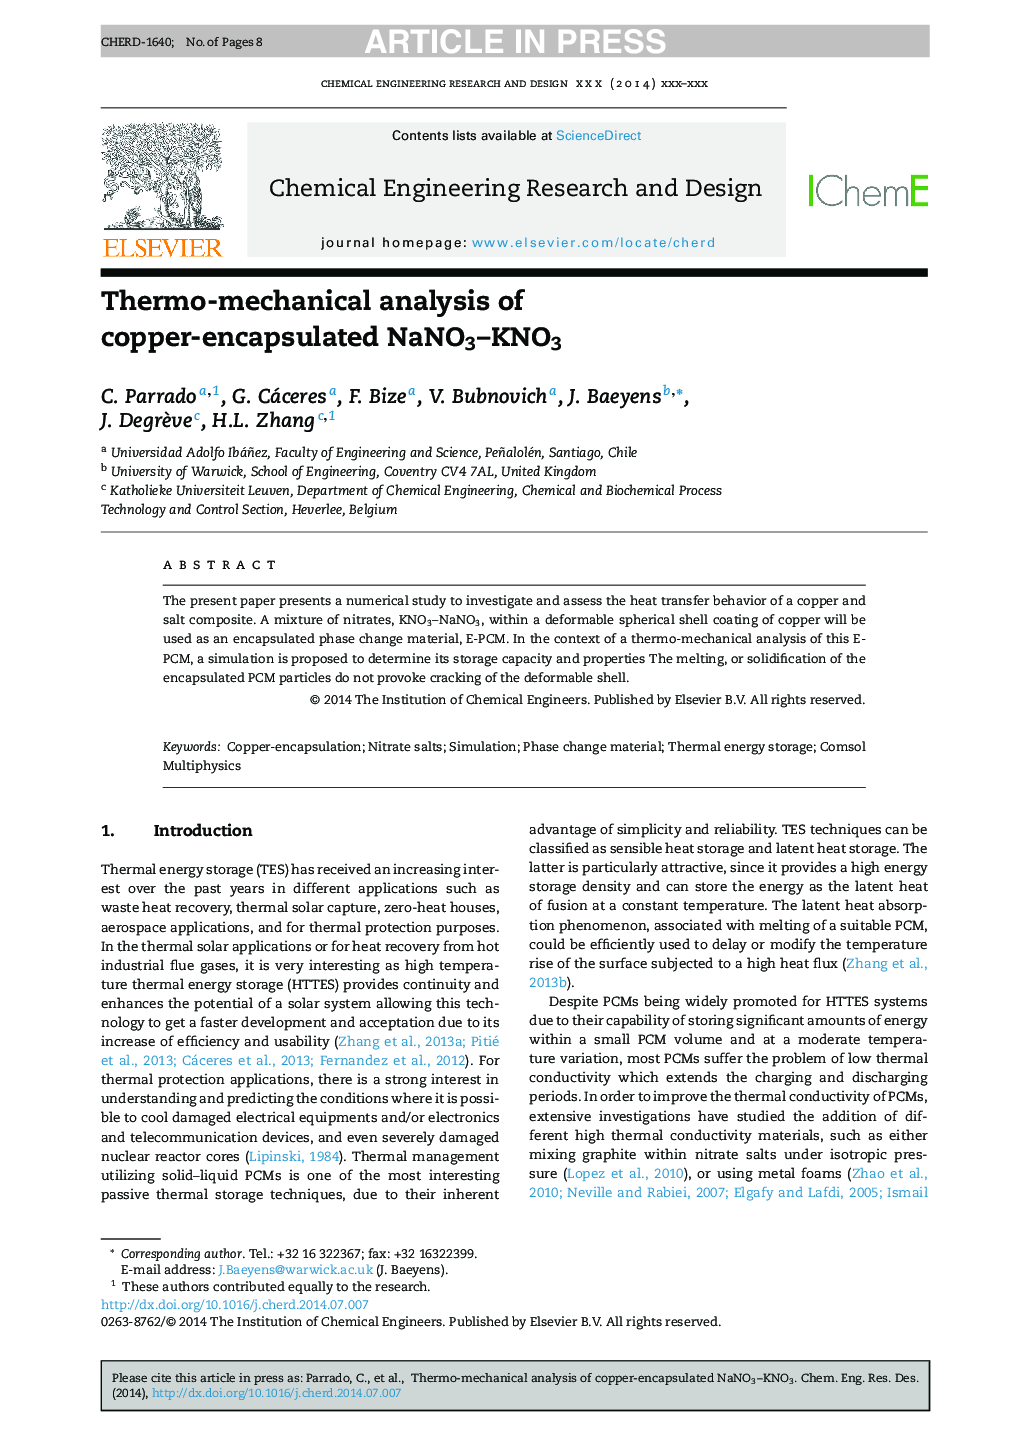 Thermo-mechanical analysis of copper-encapsulated NaNO3-KNO3